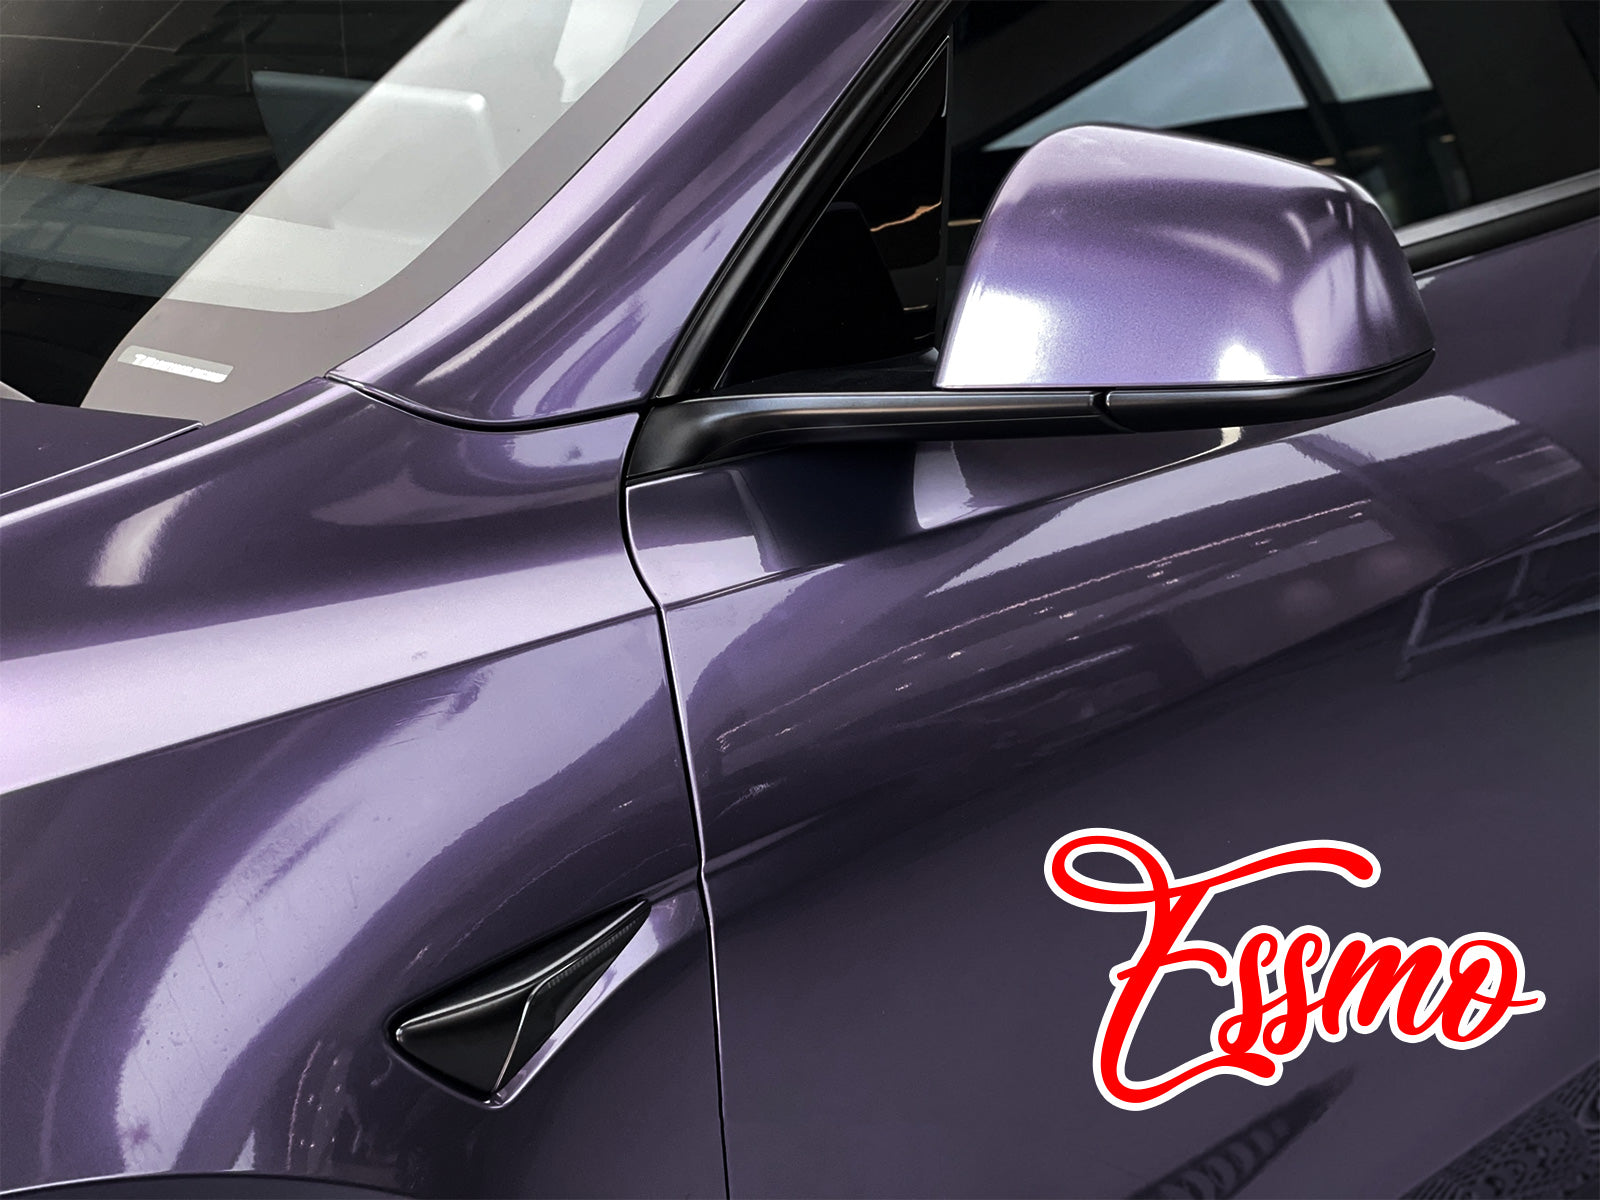 ESSMO PET Super Gloss Metallic Midnight Purple Car Vinyl Wrap